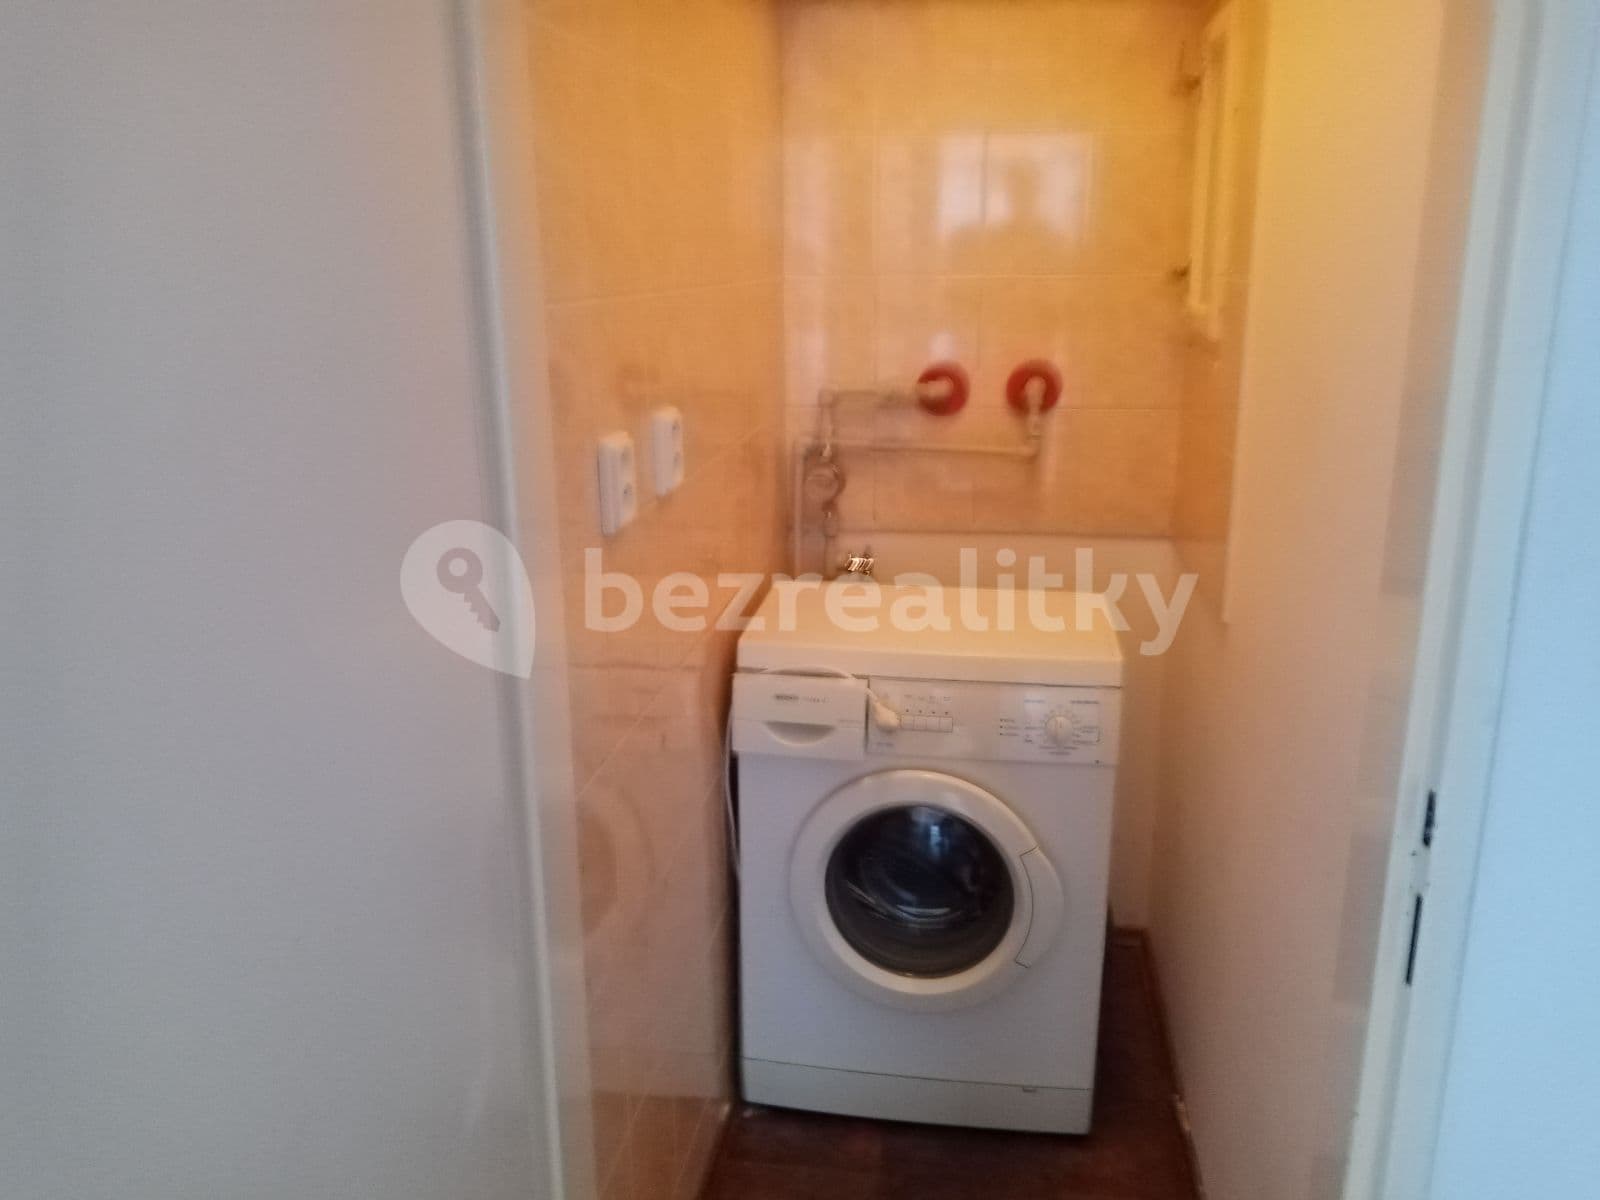 1 bedroom flat to rent, 46 m², Prague, Prague